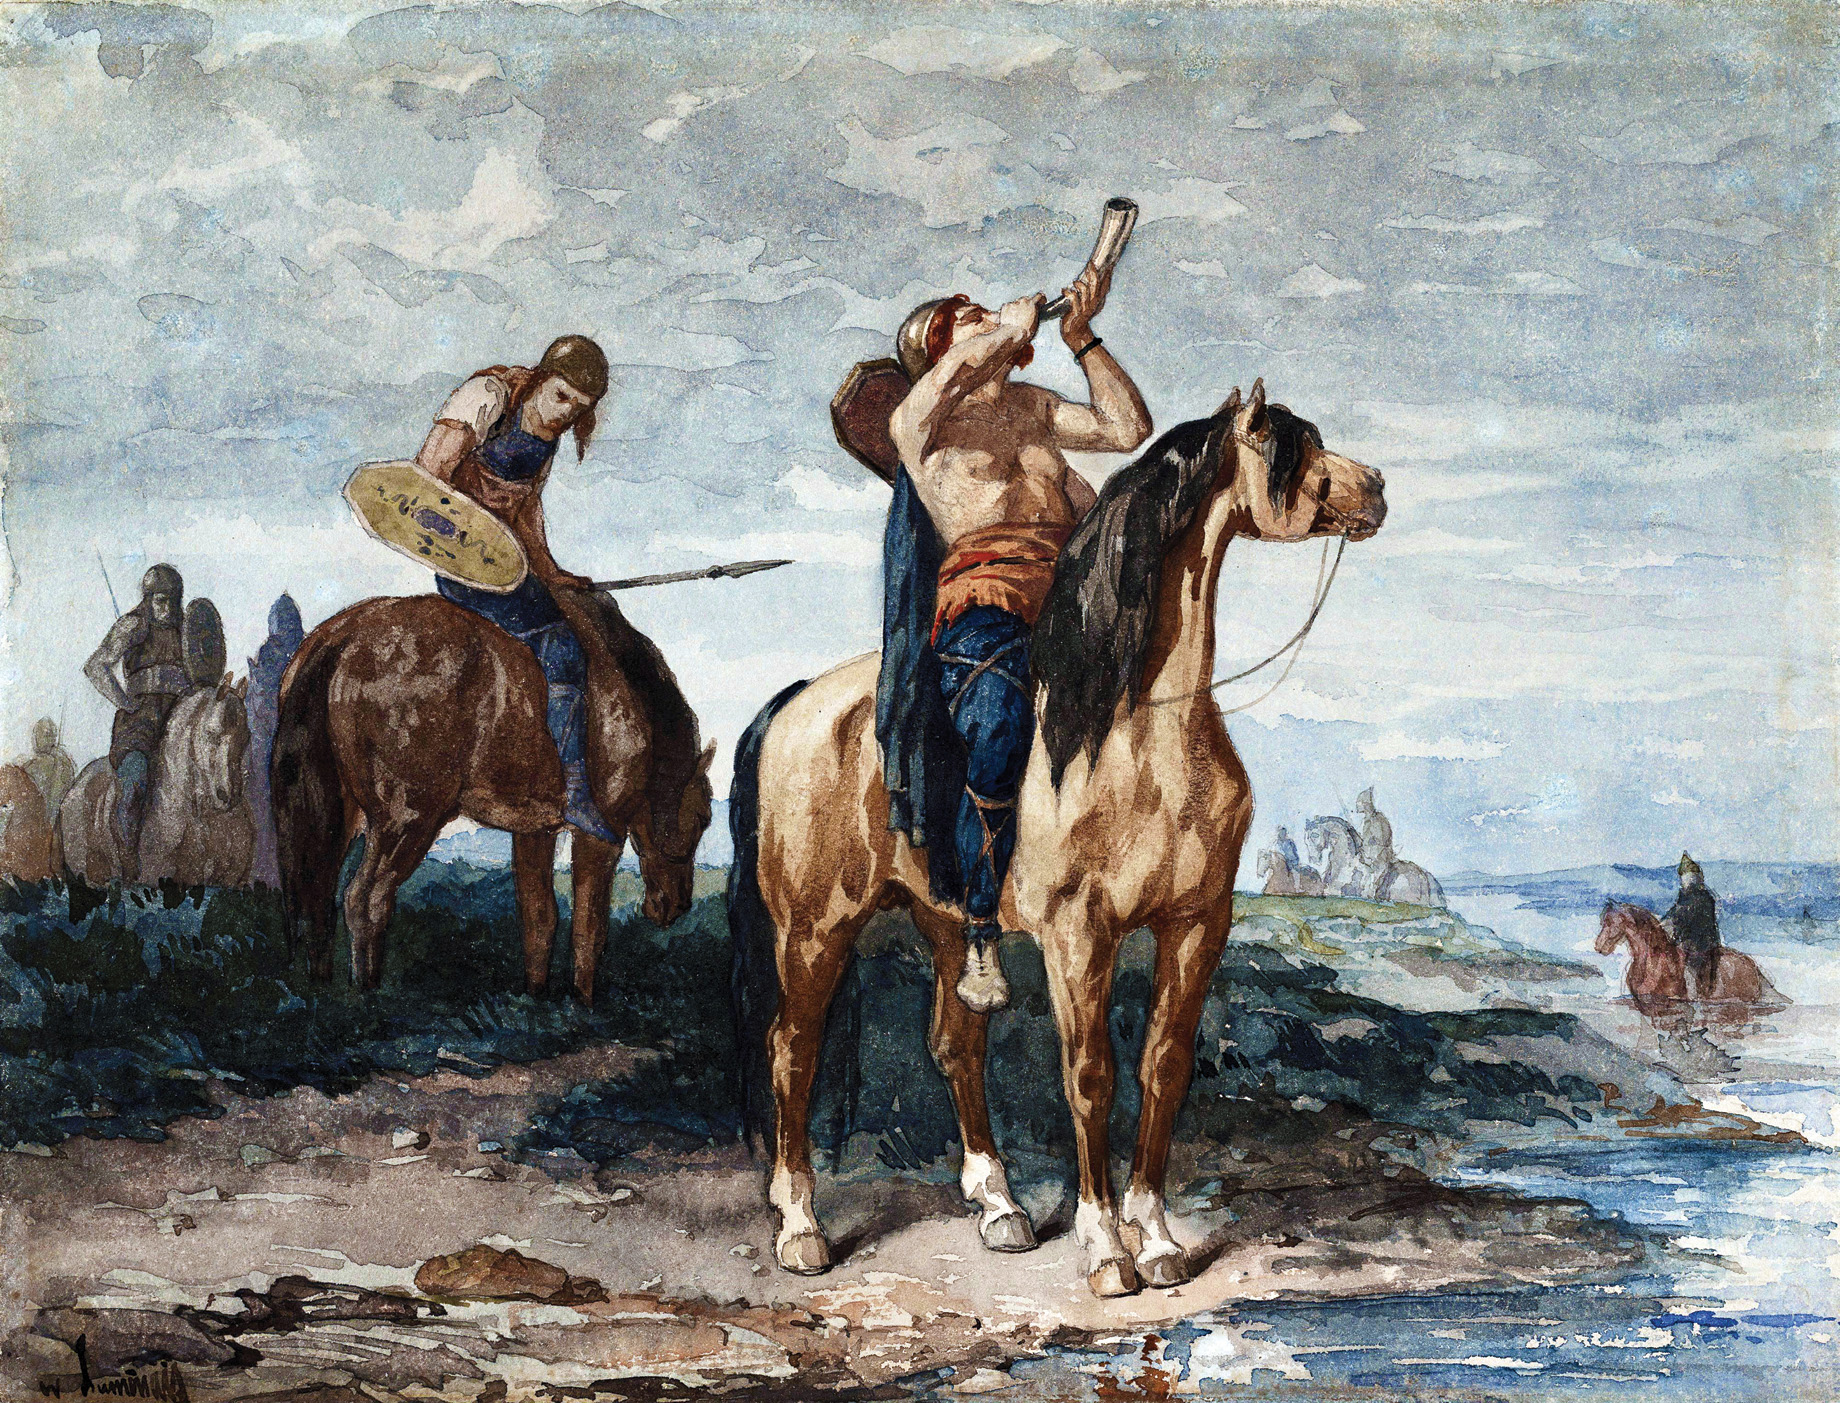 Crassus' son Publius commanded 1,000 Gallic horsemen that formed the backbone of the Roman cavalry.